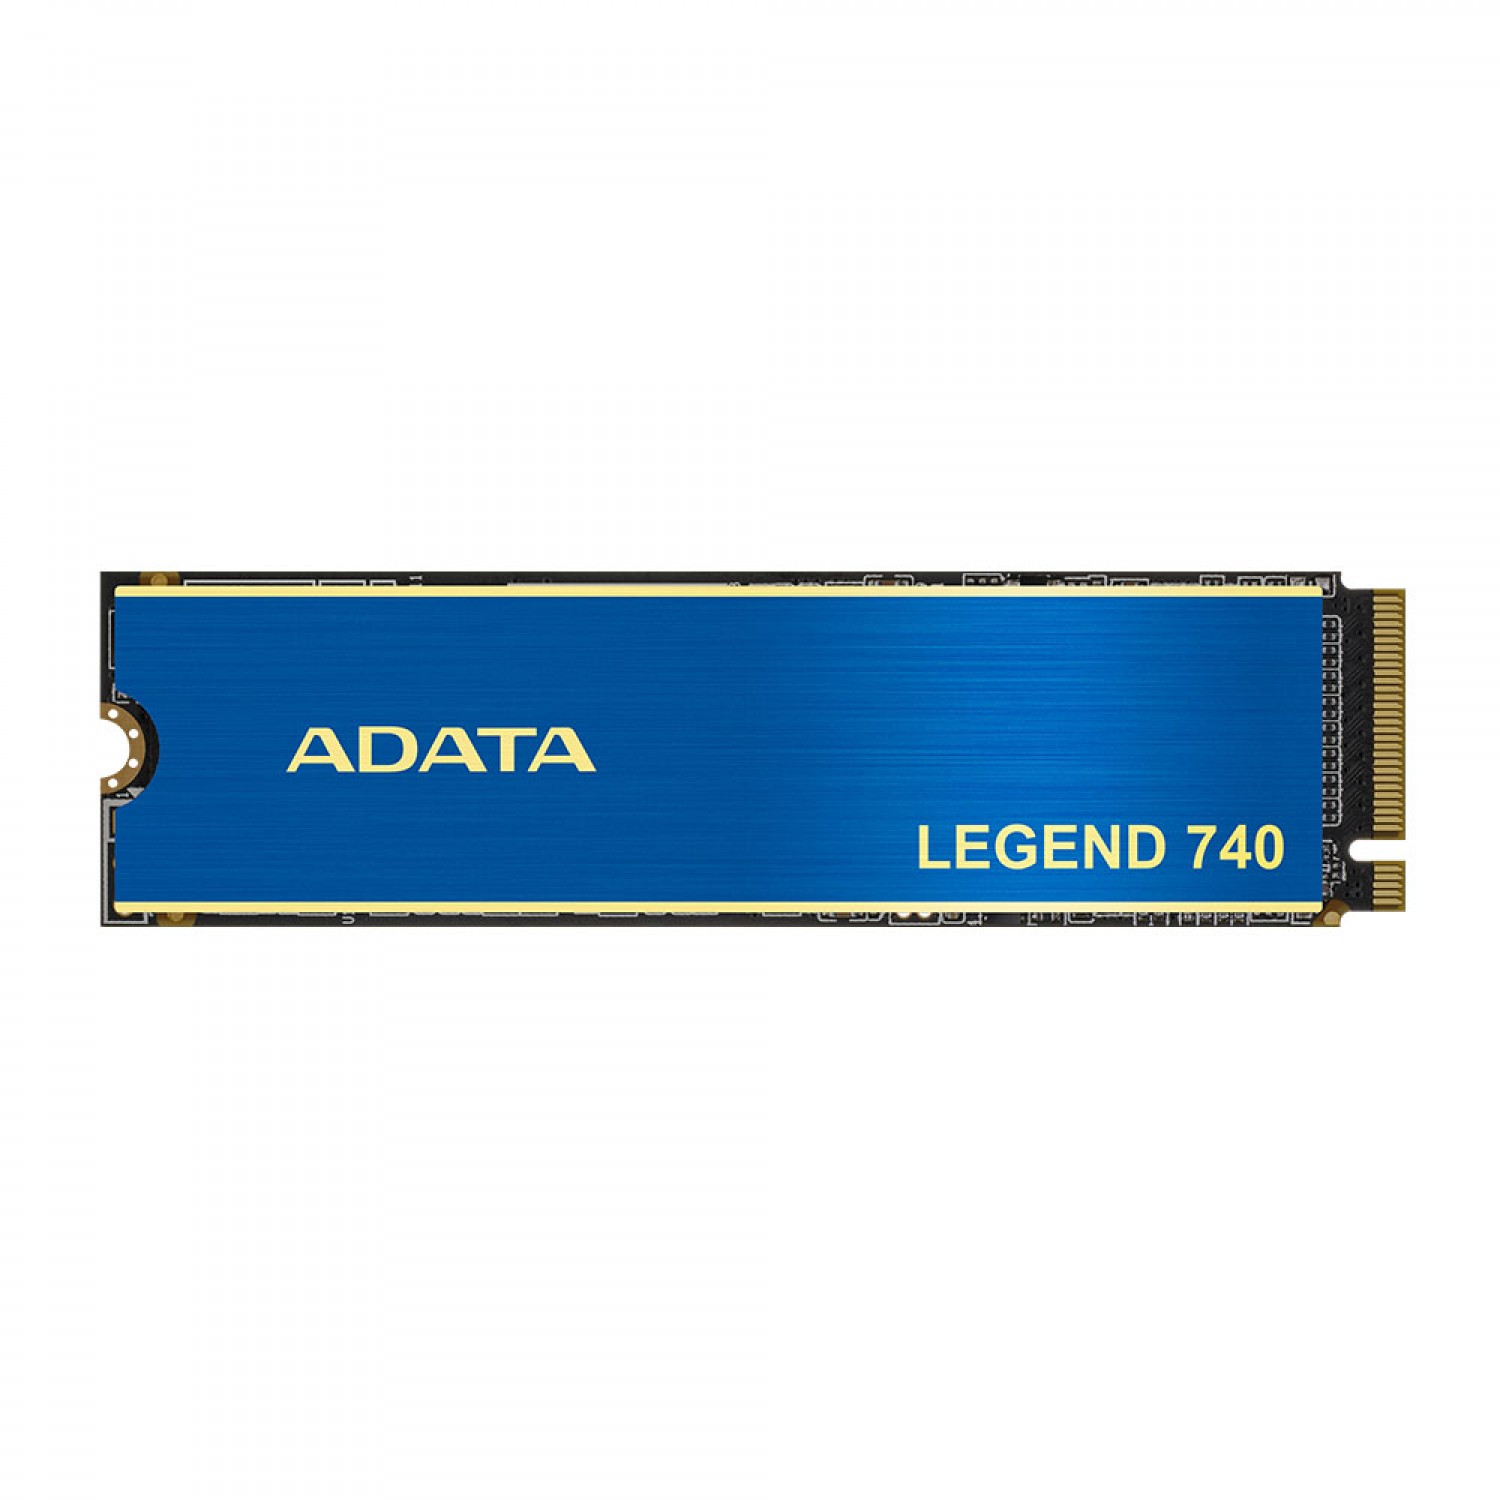 حافظه اس اس دی ADATA Legend 740 500GB